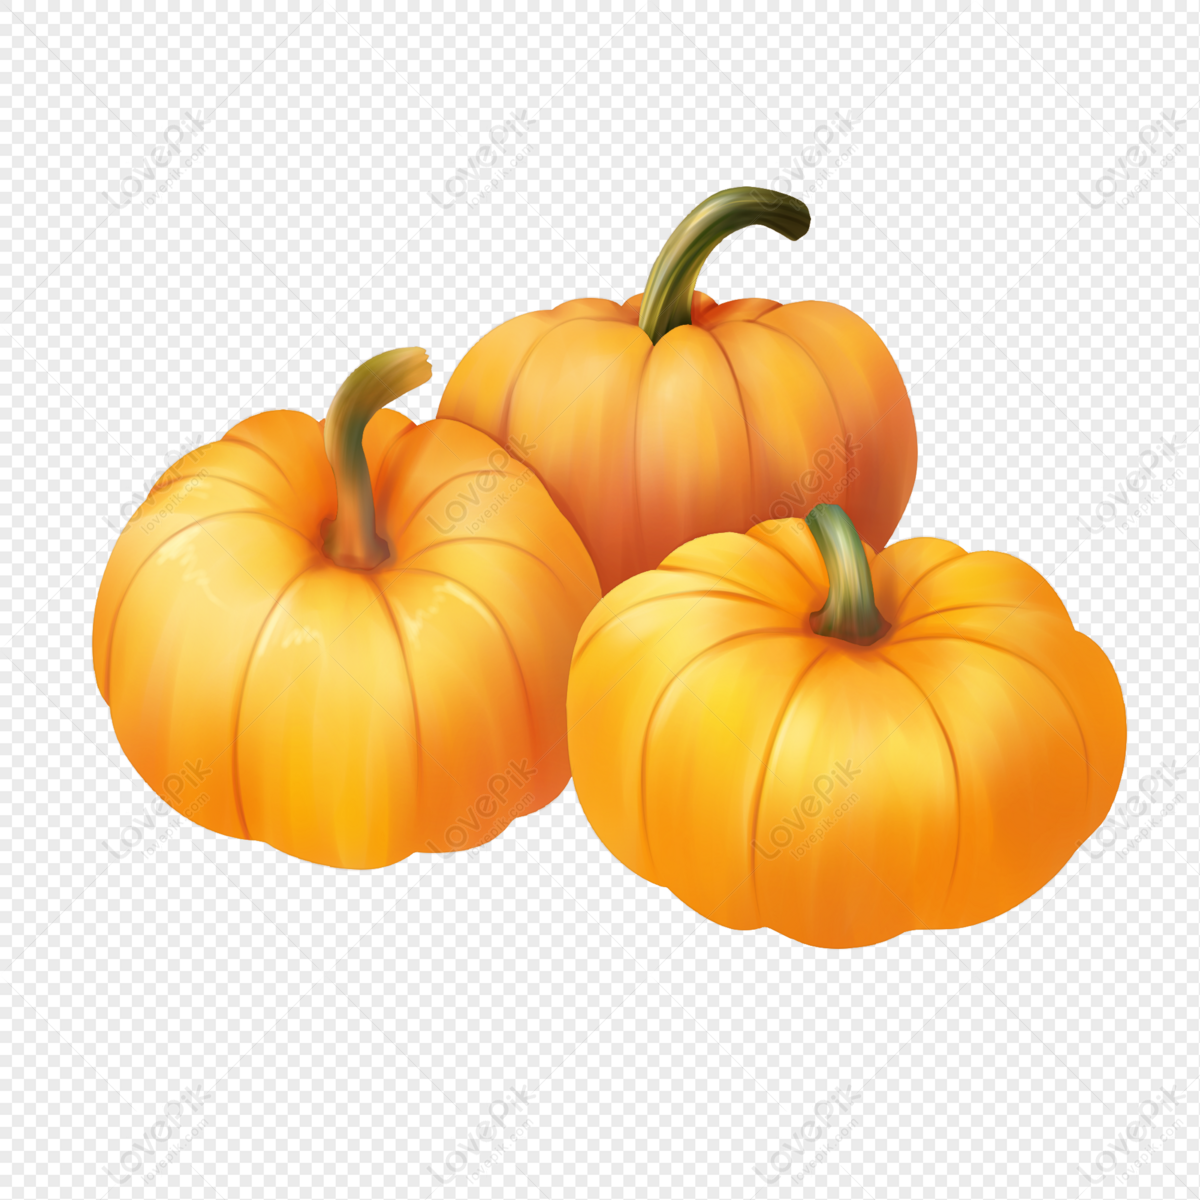 Pumpkin PNG Transparent Images Free Download - Pngfre